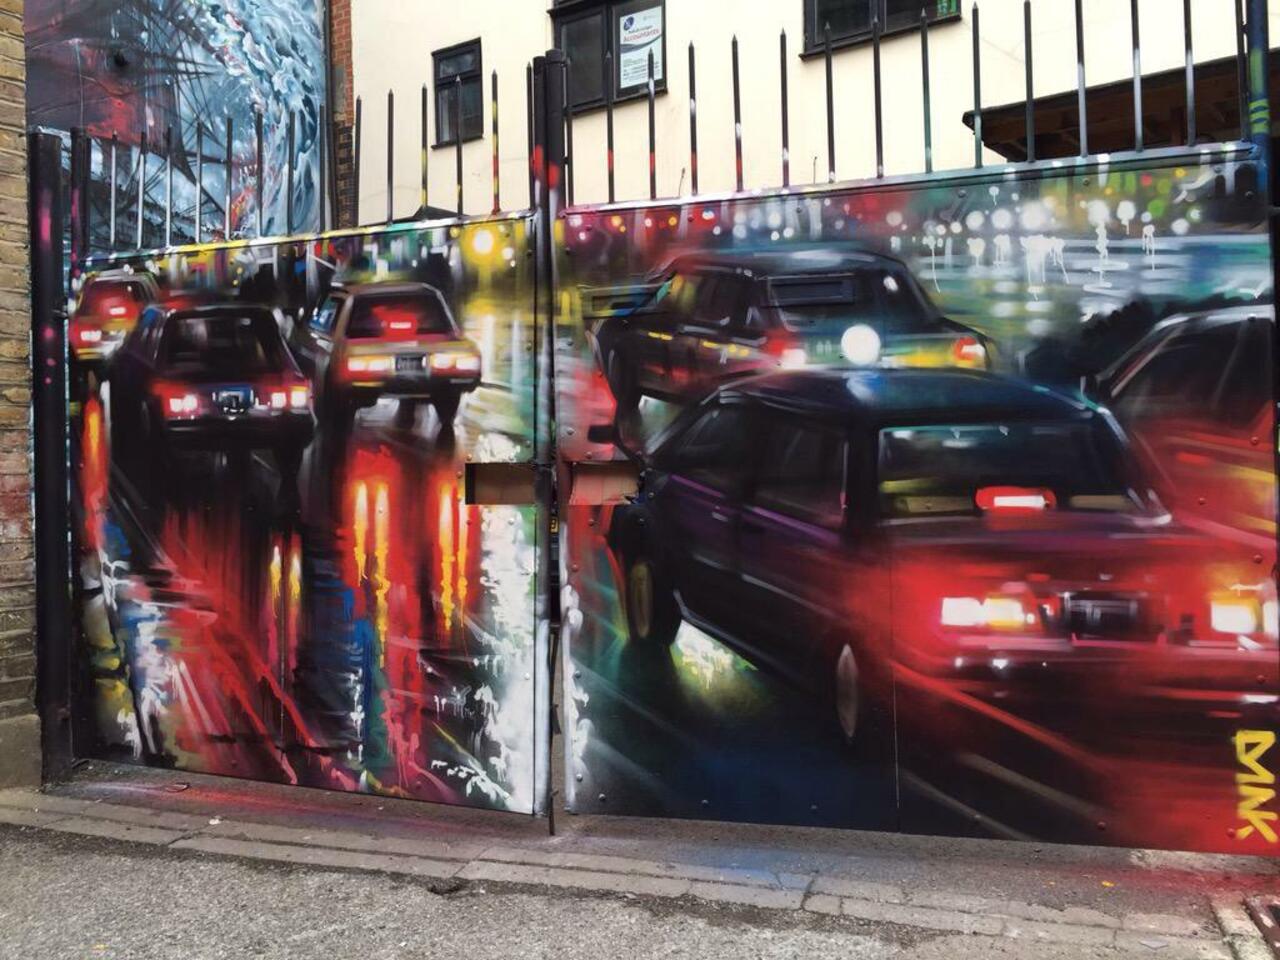 New Street Art by DanKitchener in Brick Lane London 

#art #graffiti #mural #streetart http://t.co/MDCker7BLr